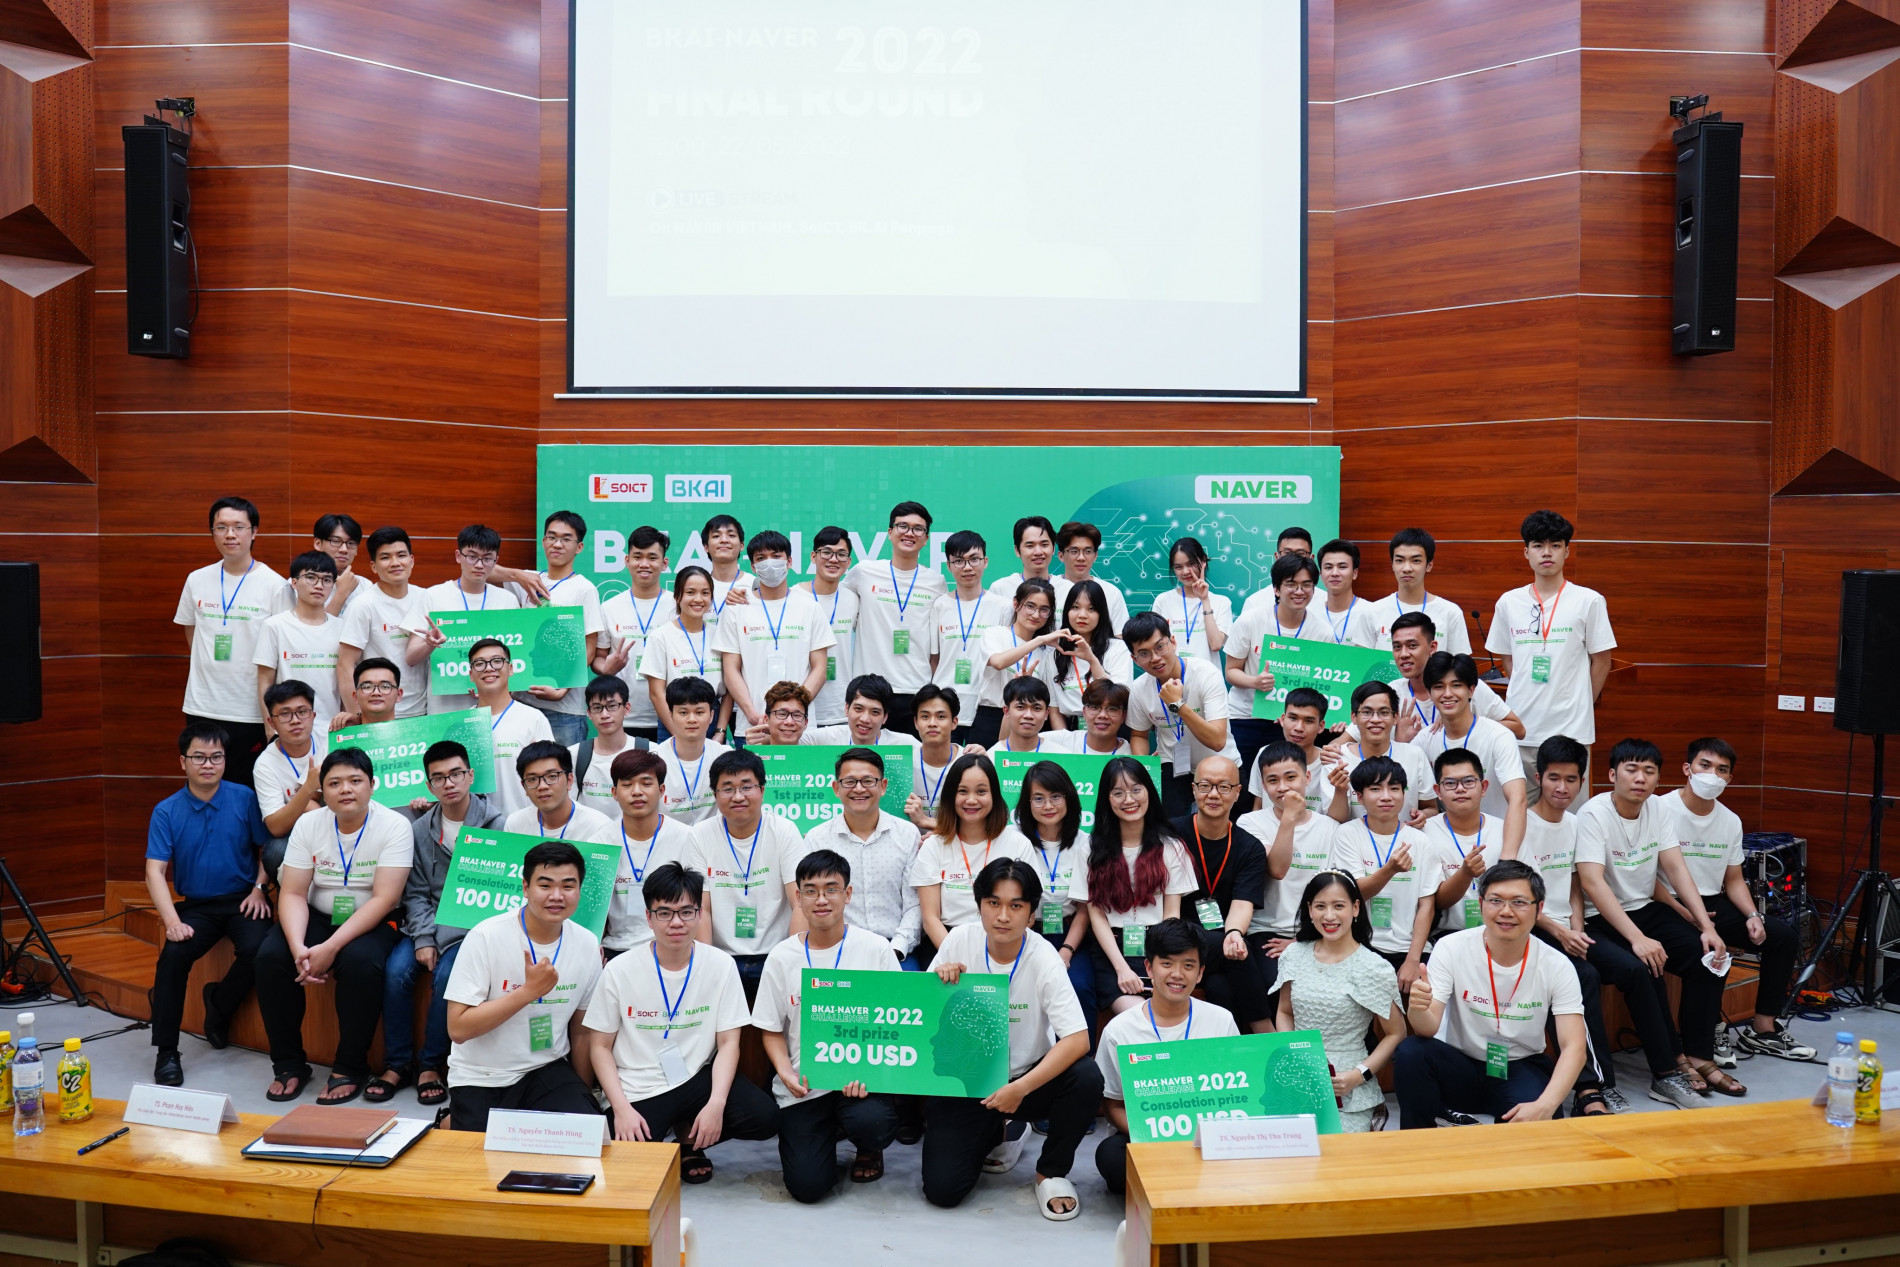 BKAI NAVER Hackathon organized in 2022